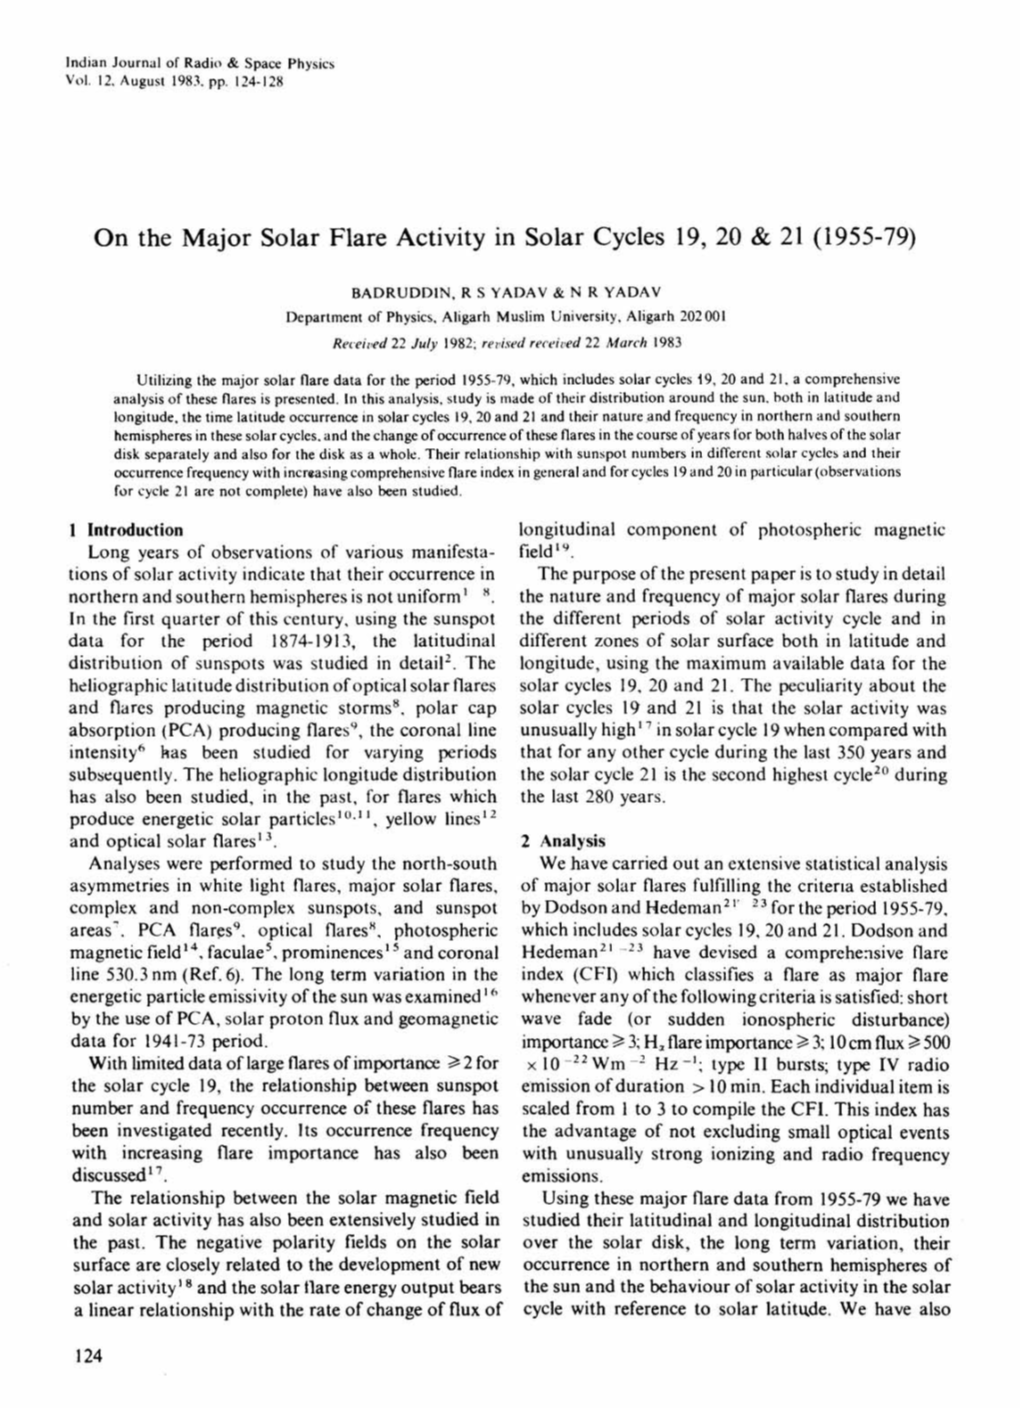 On the Major Solar Flare Activity in Solar Cycles 19,20 & 21 (1955-79)